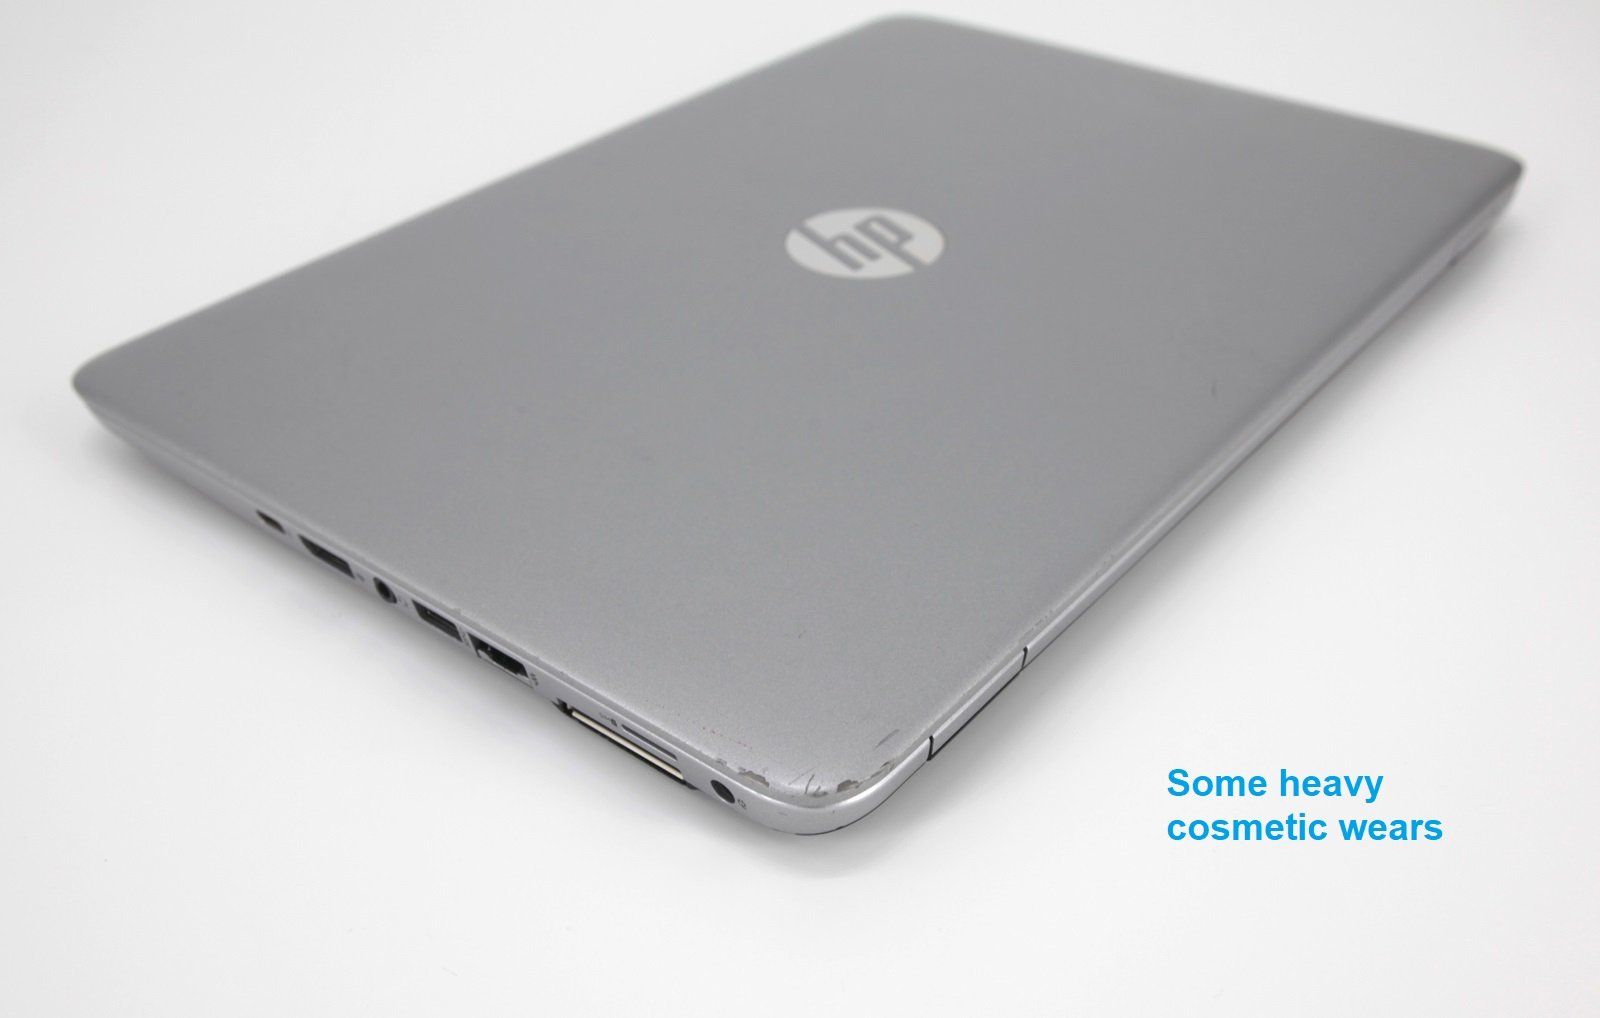 HP EliteBook 840 G3 Laptop: 120GB 6th Gen i5, 8GB RAM Warranty VAT (Grade C) - CruiseTech